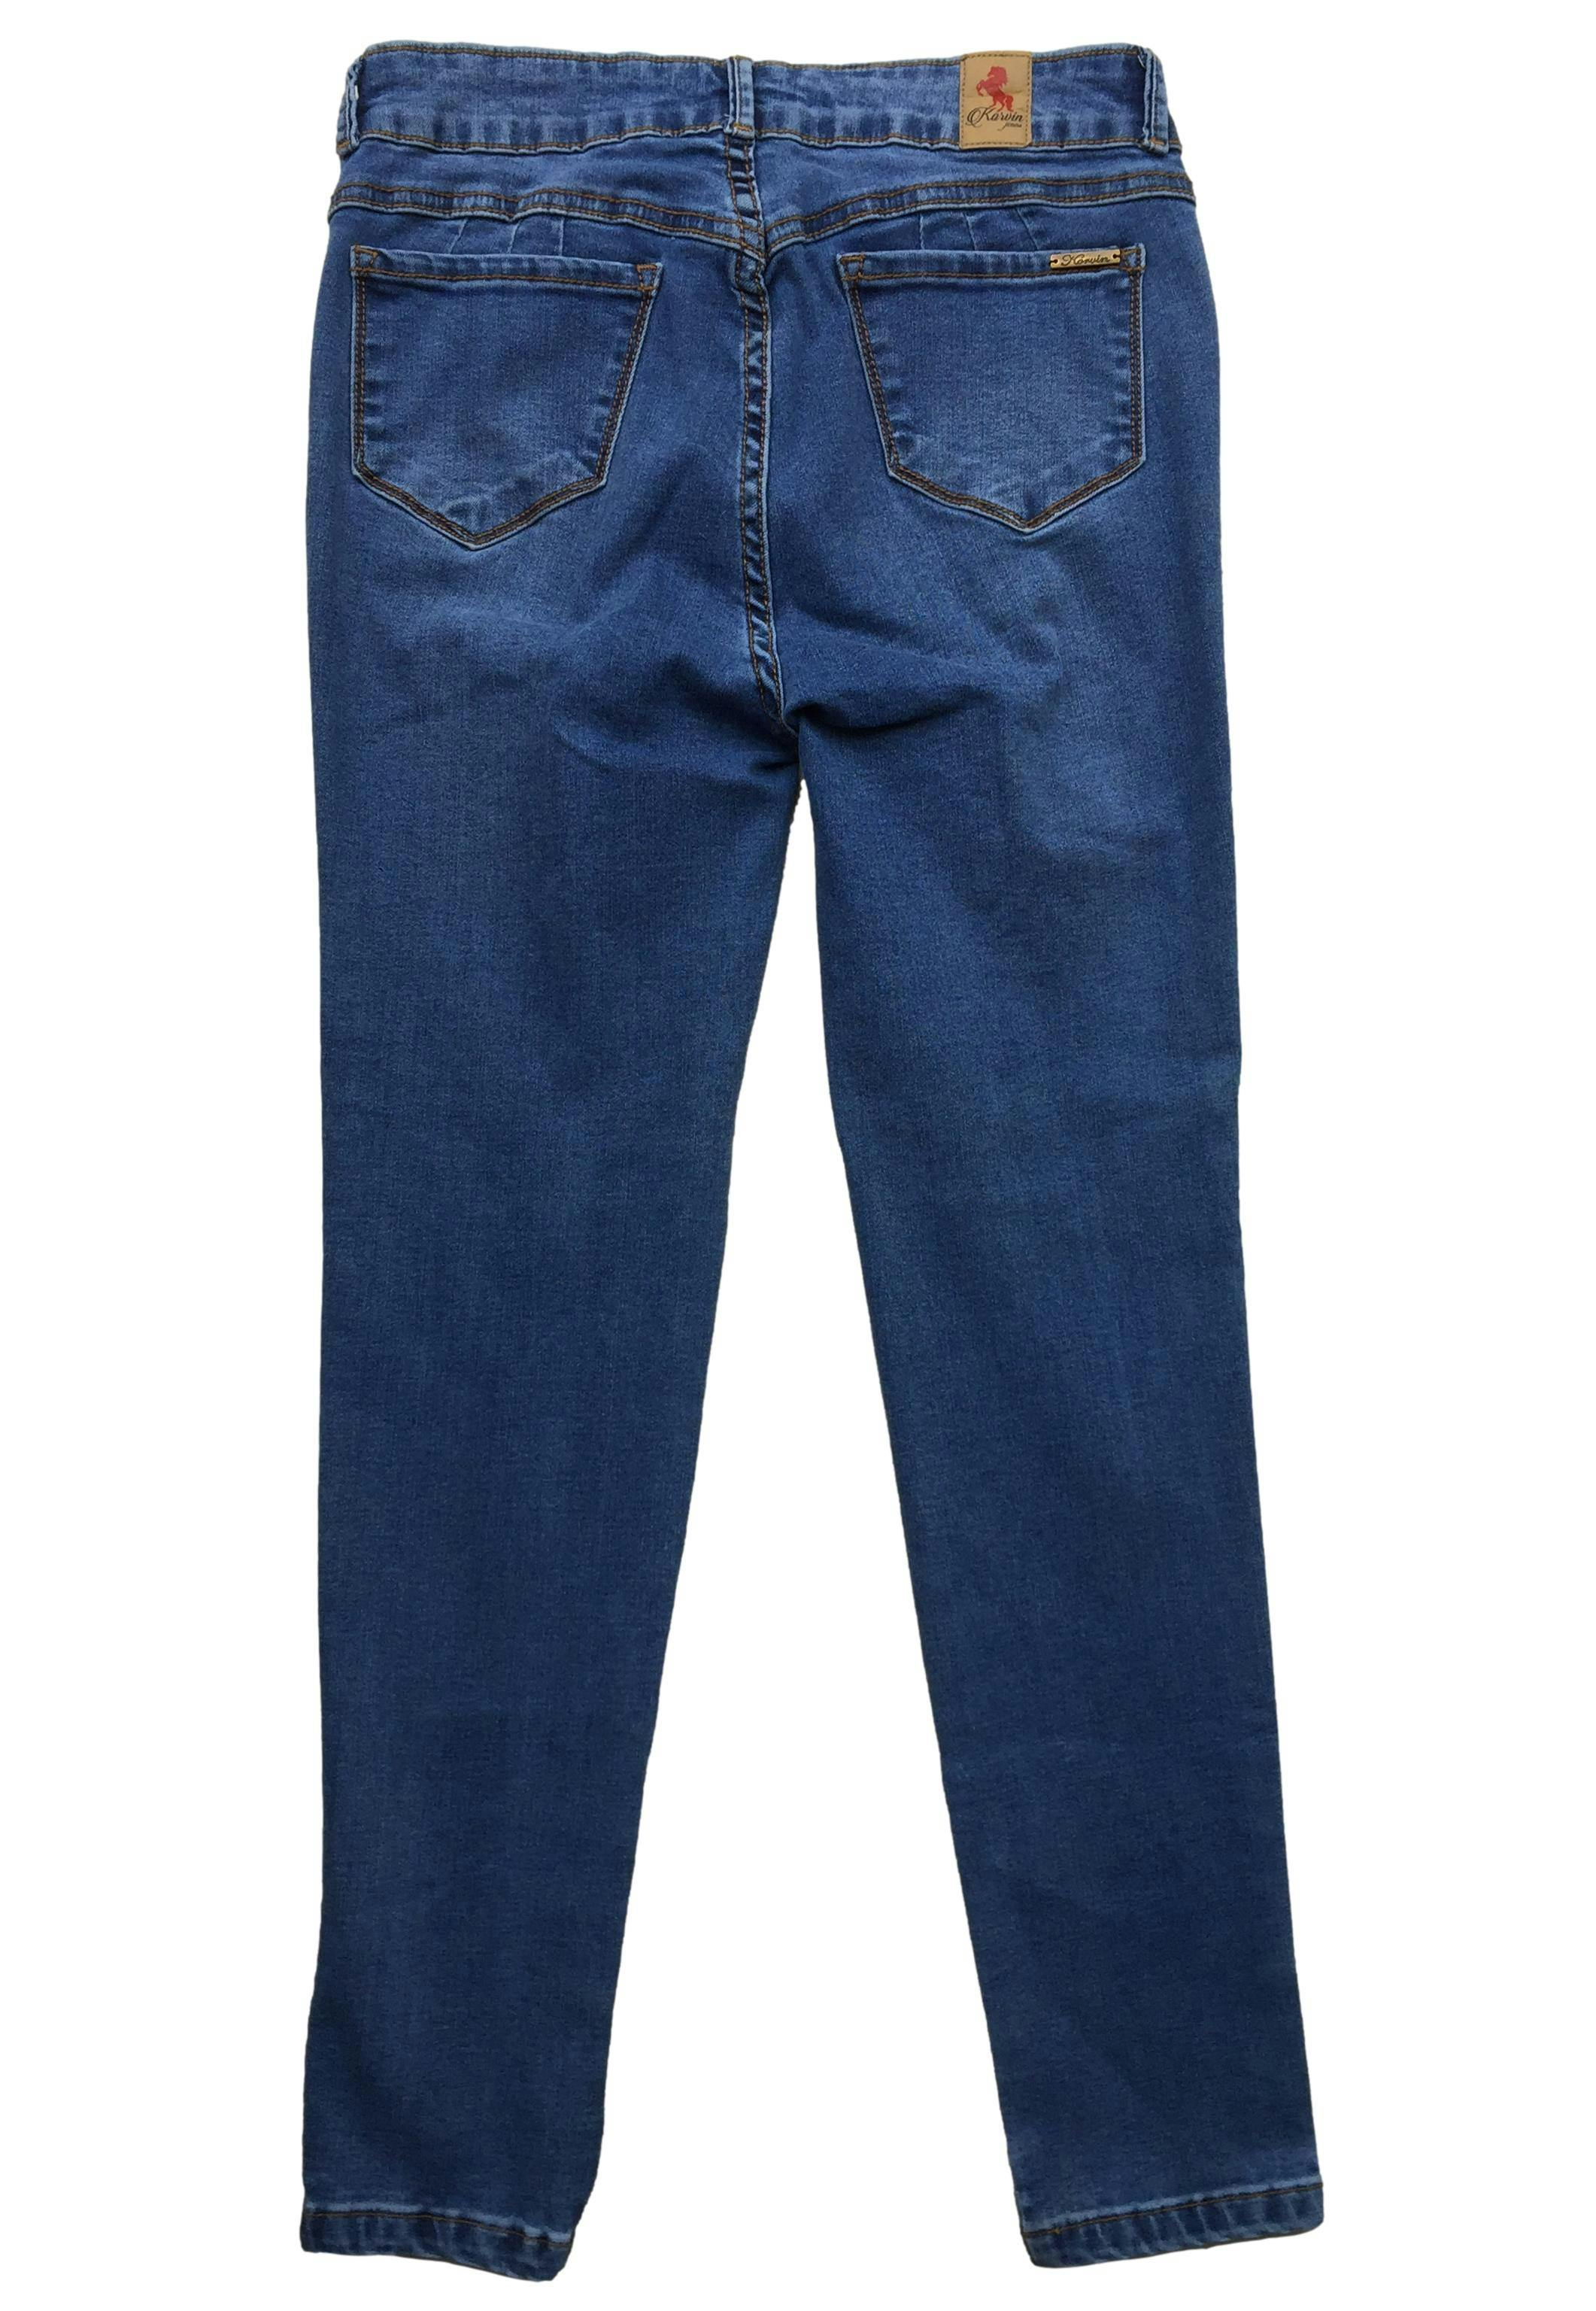 Pantalón jean, rasgasdos delanteros, pitillo, ligeramente stretch. Cintura: 68cm, Tiro: 23cm, Largo: 84cm